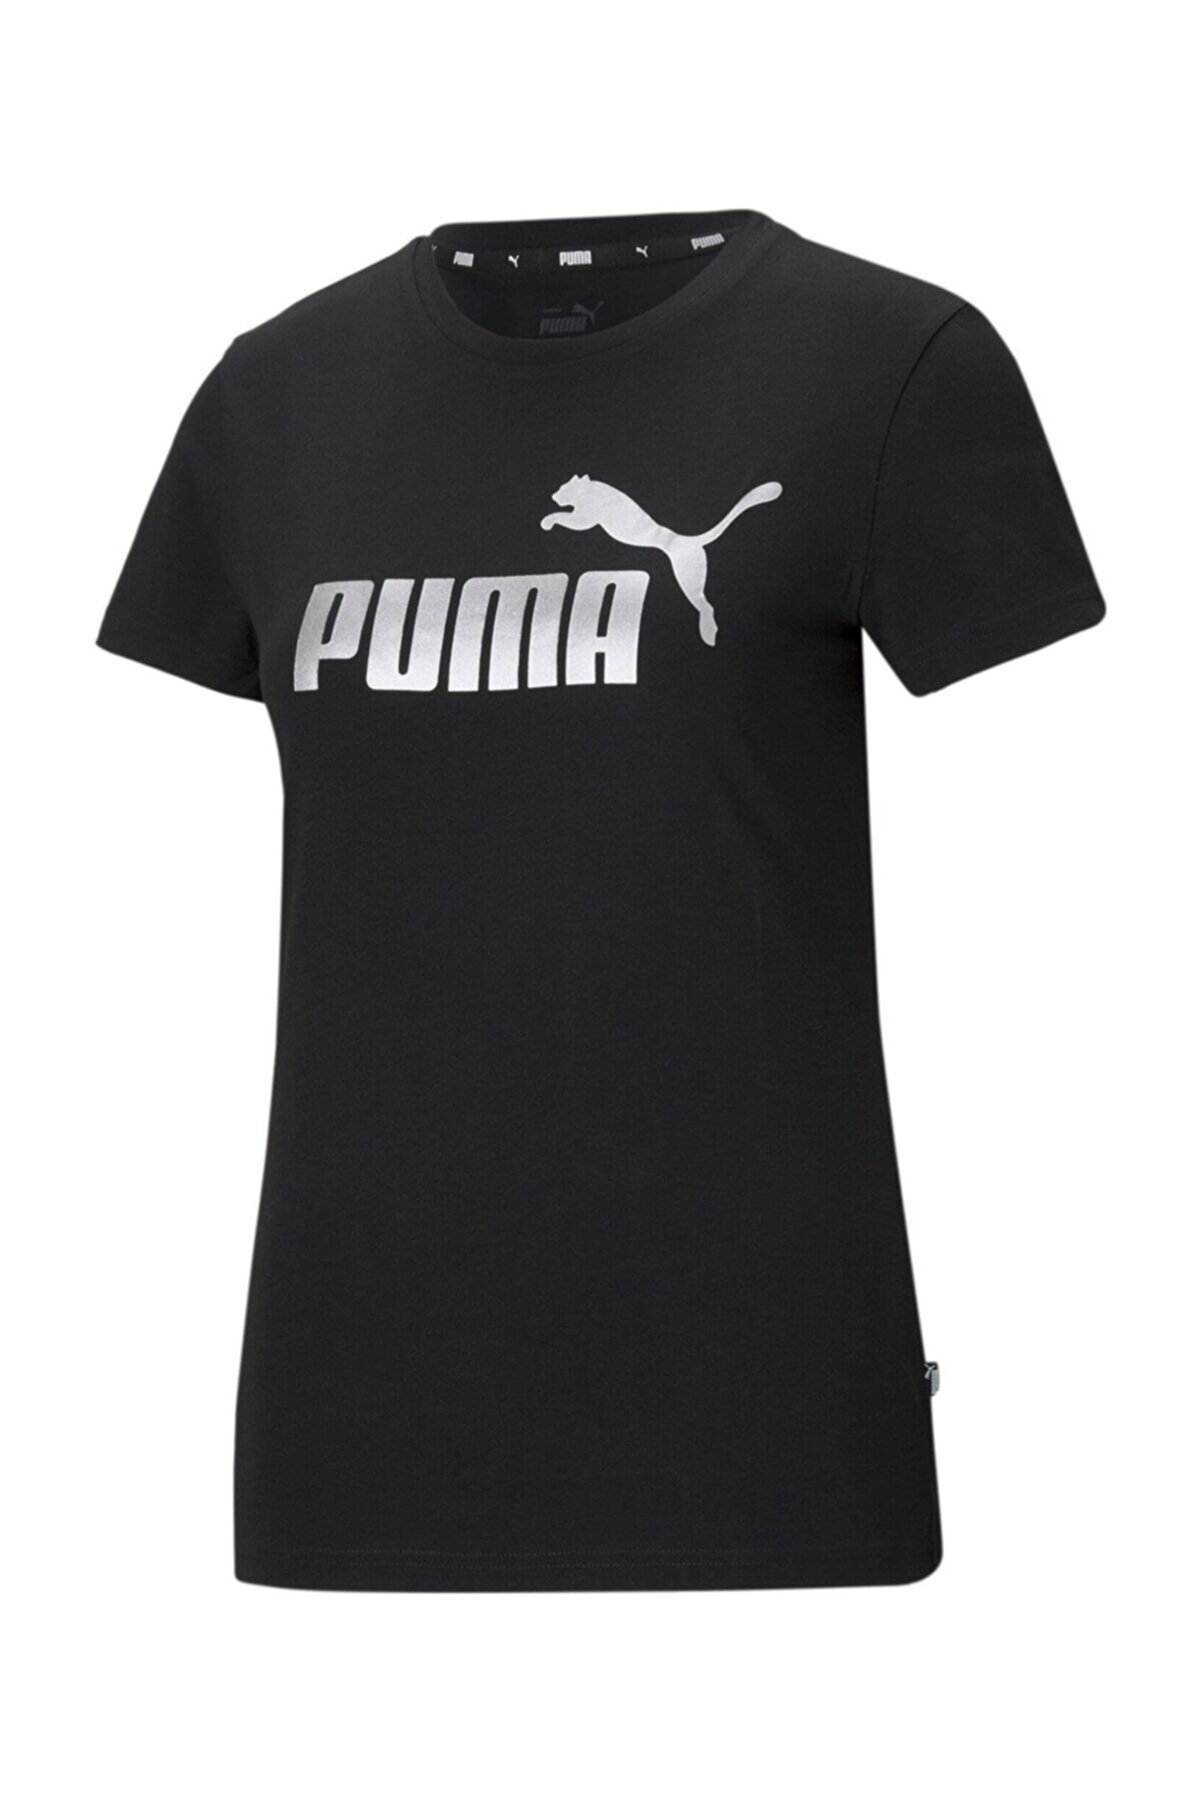 Puma Ess Metallic Logo Tee Kadın T-shirt Black-sılver 586890-51